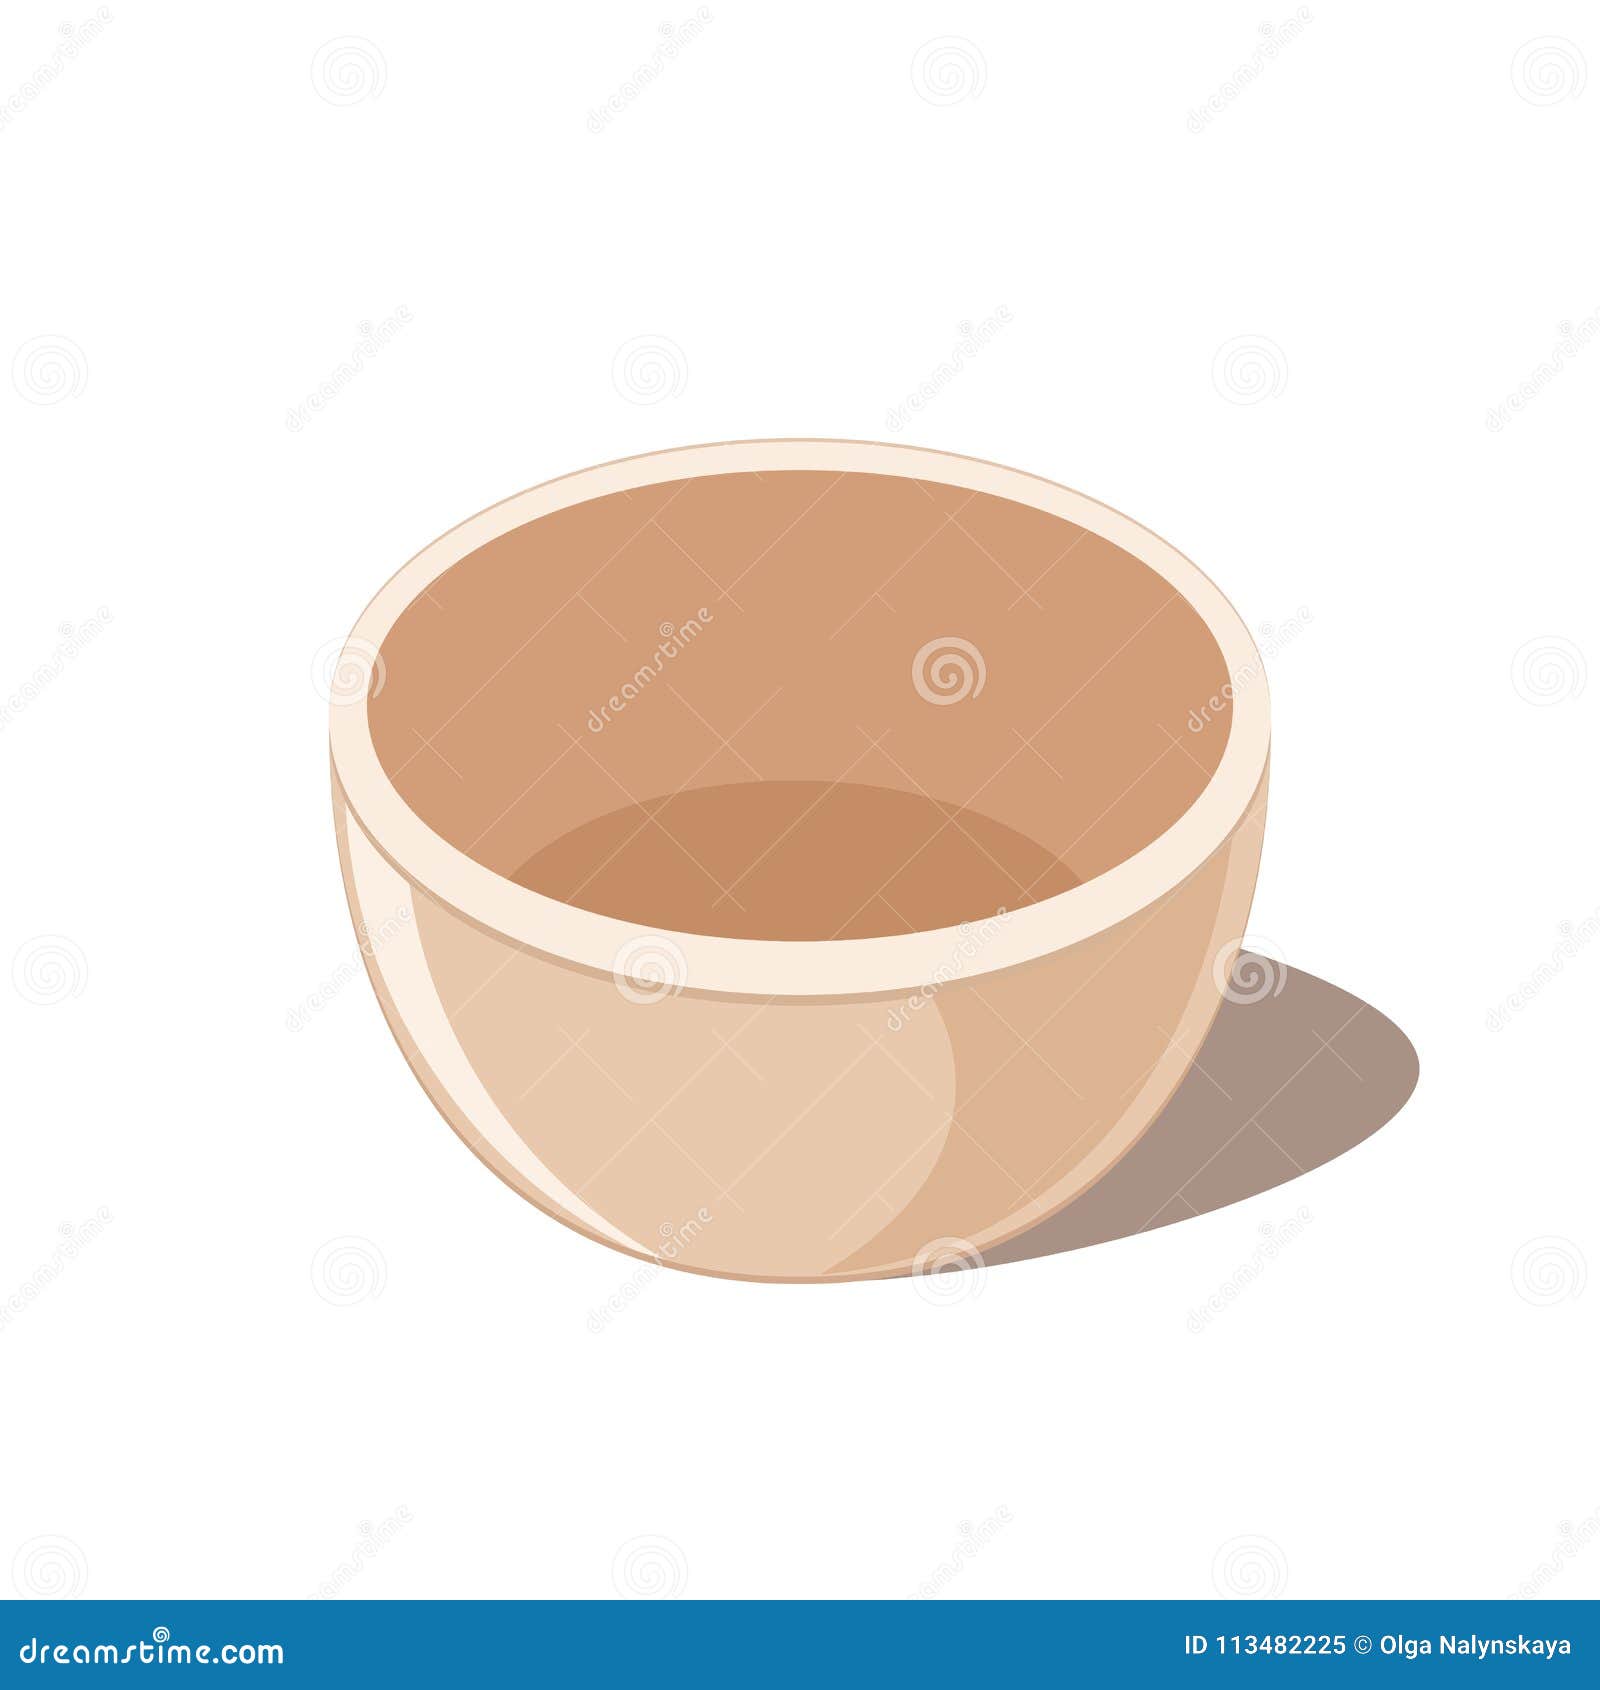 empty bowl icon